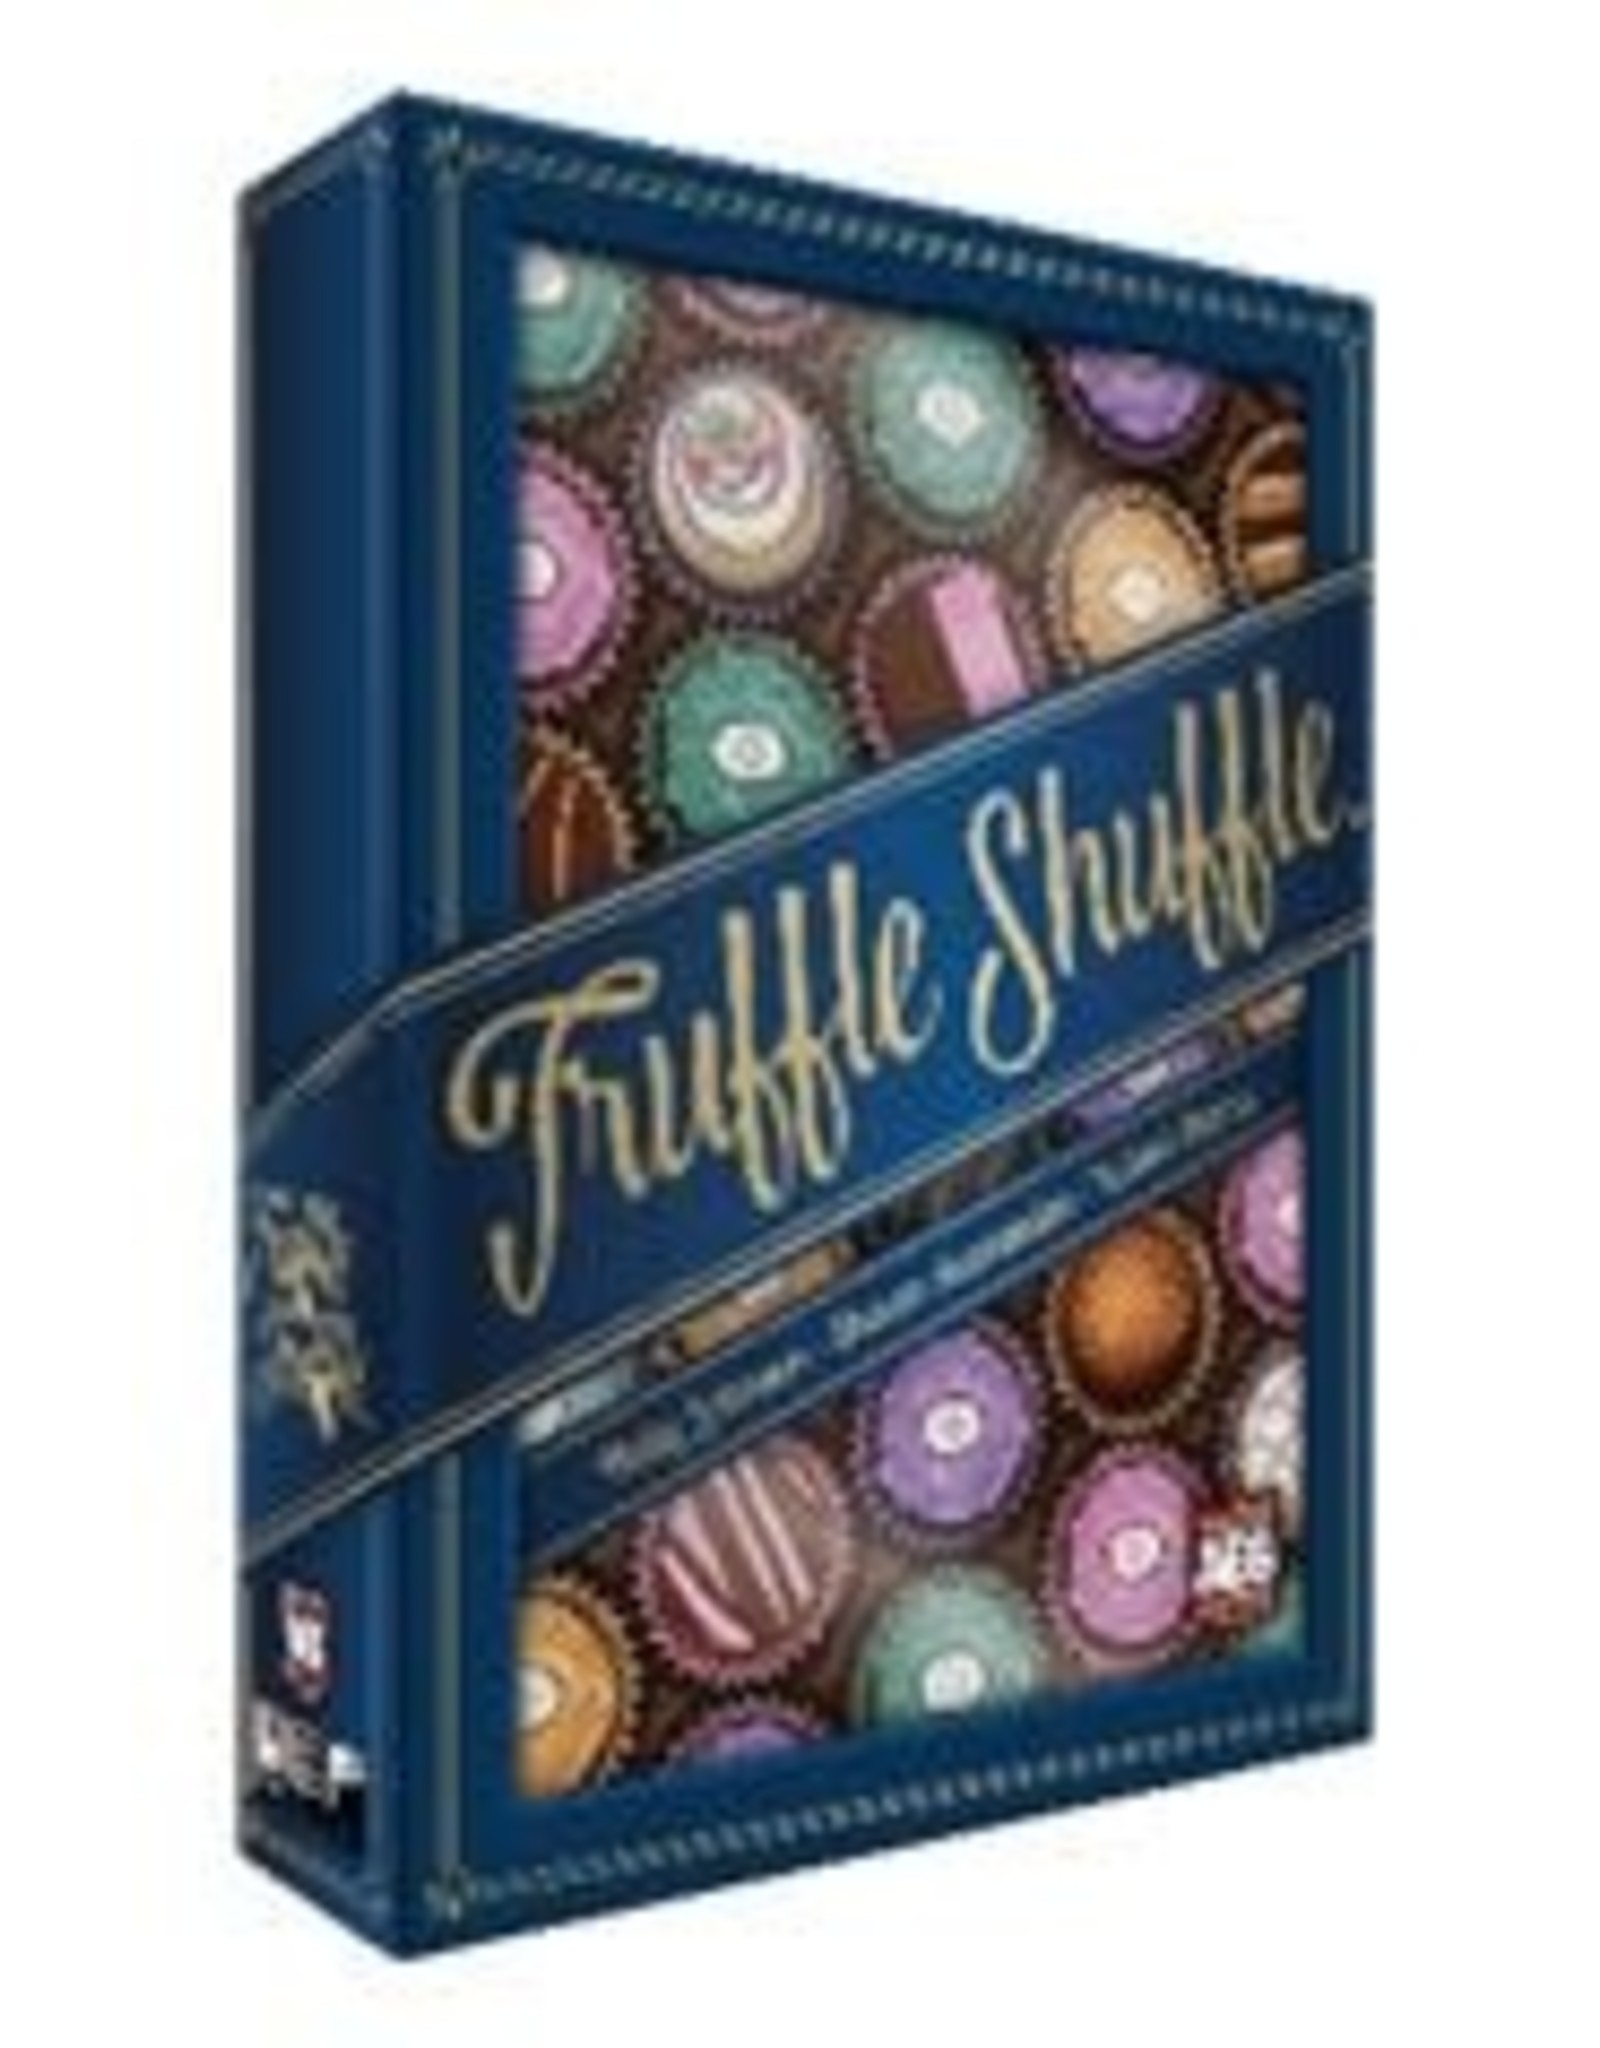 Universal Distribution Truffle Shuffle